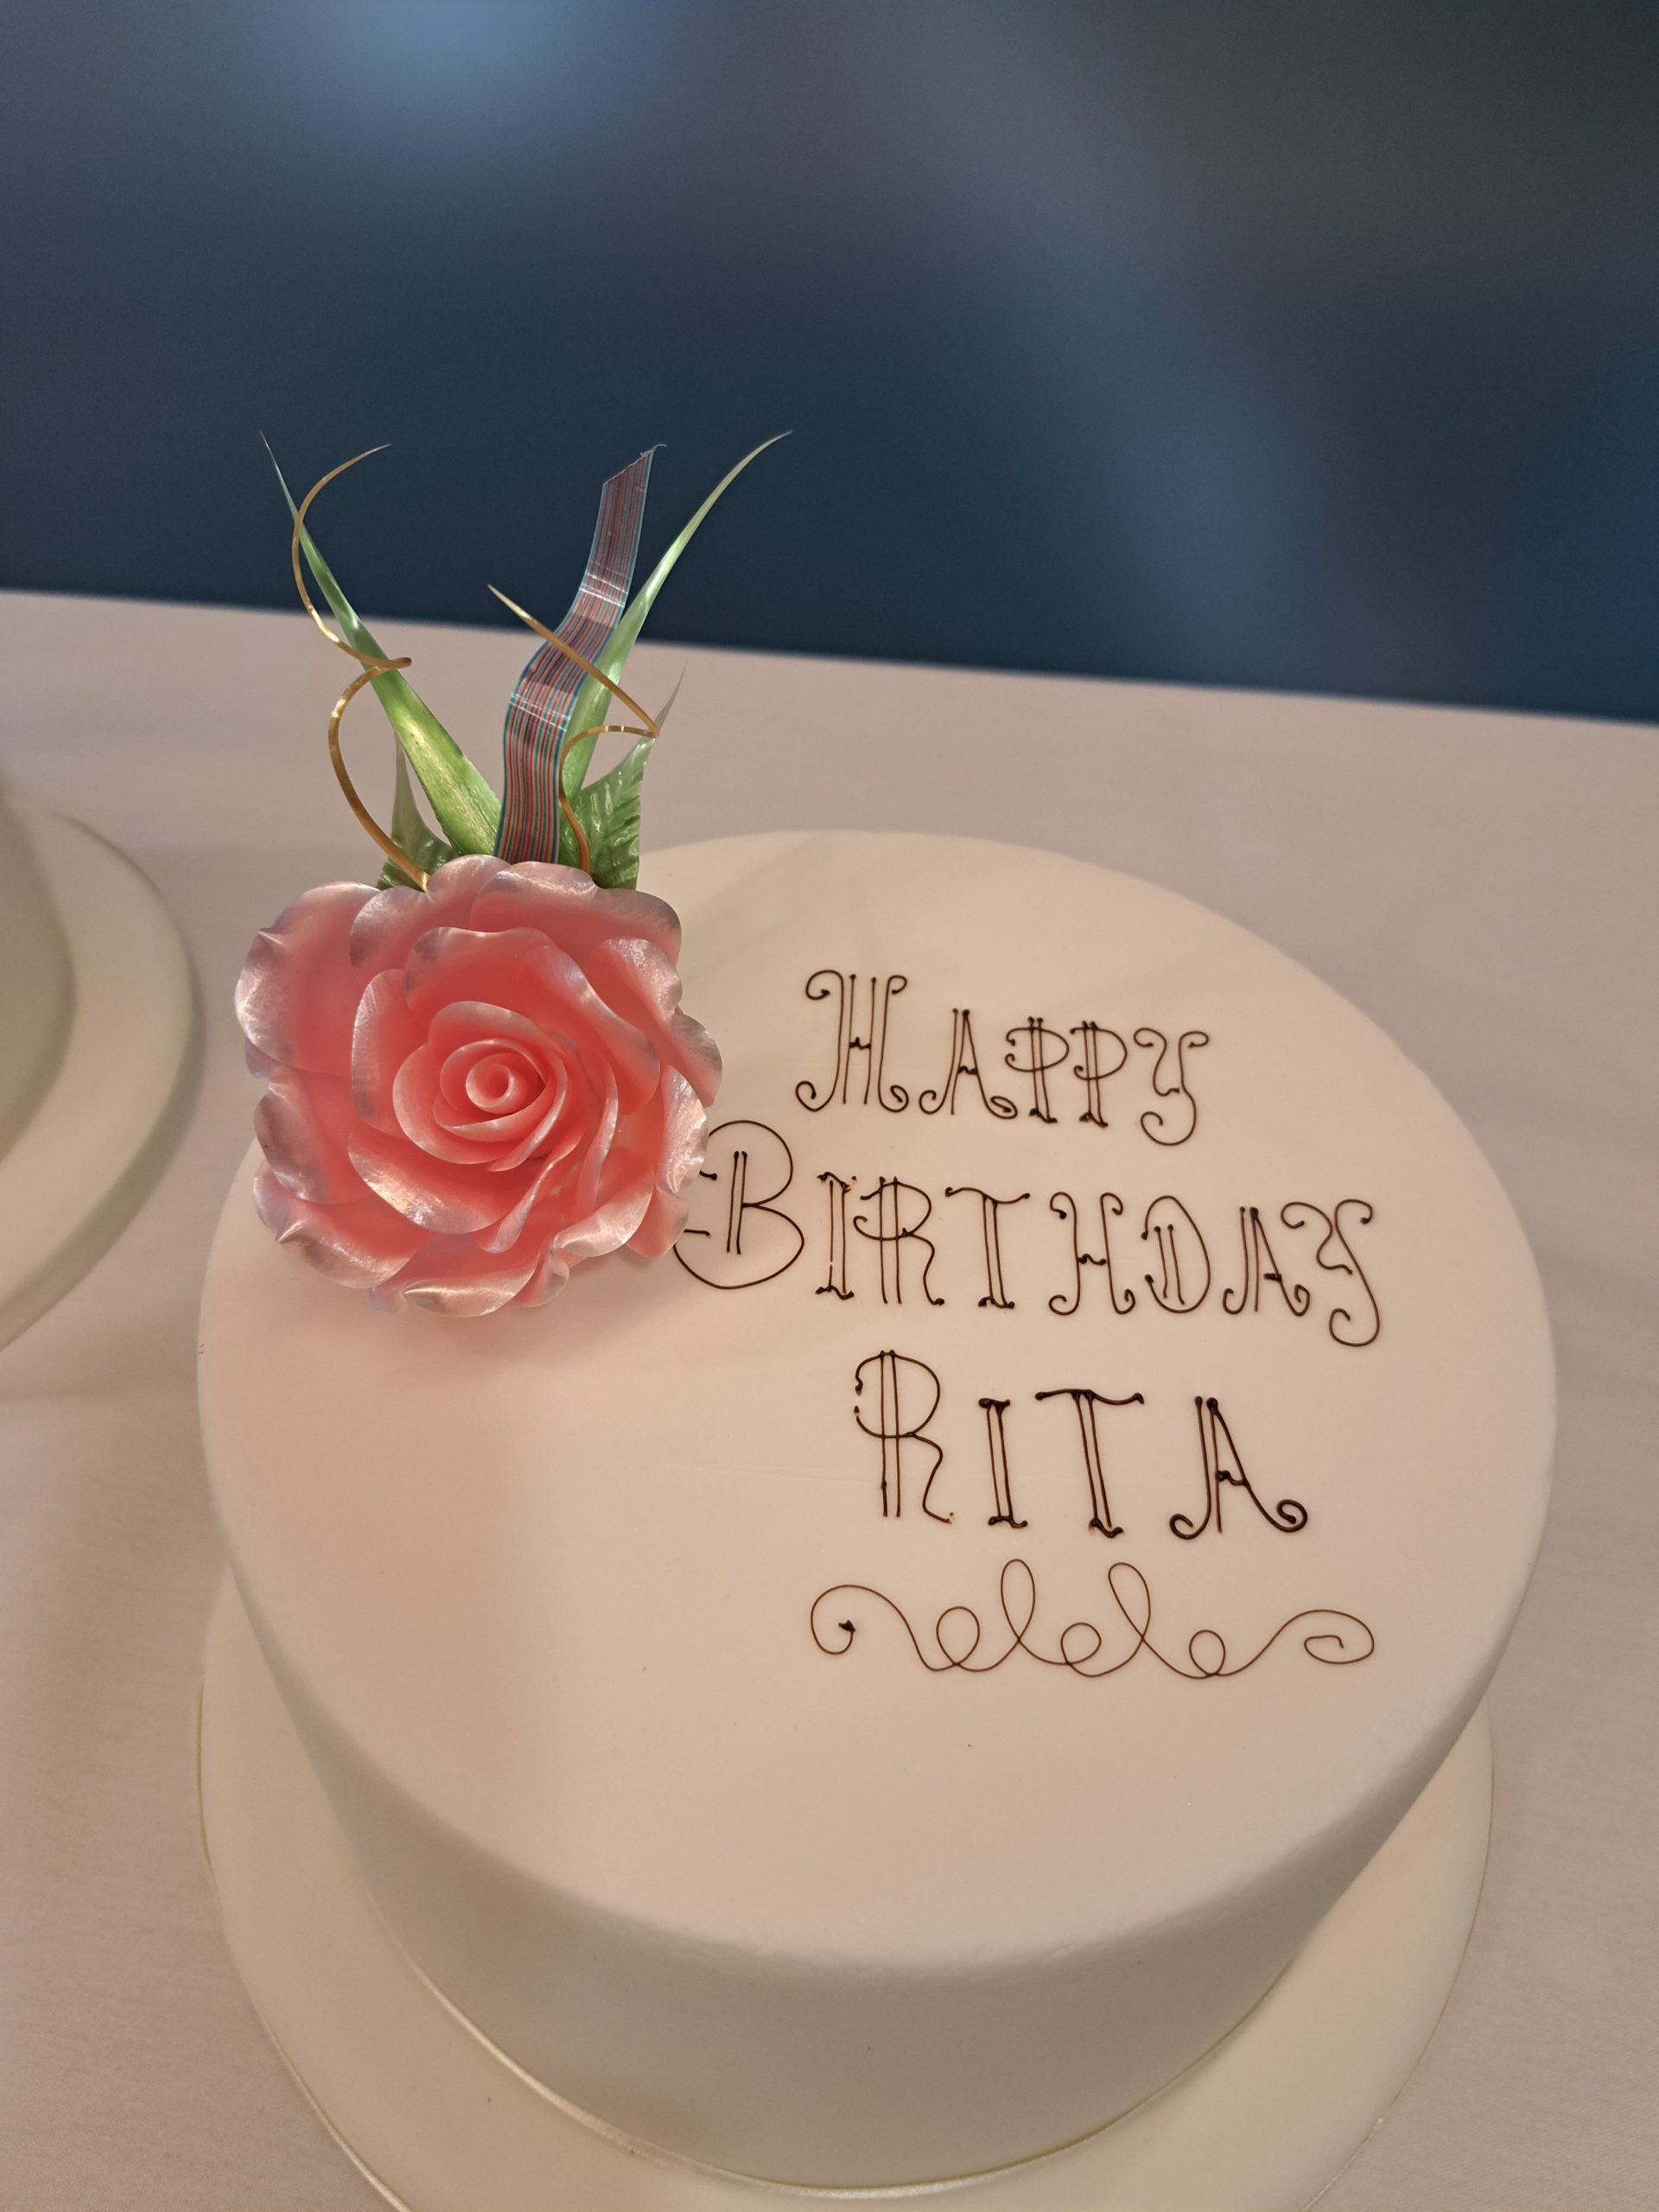 Happy Birthday Rita by Oceanlily468 on DeviantArt